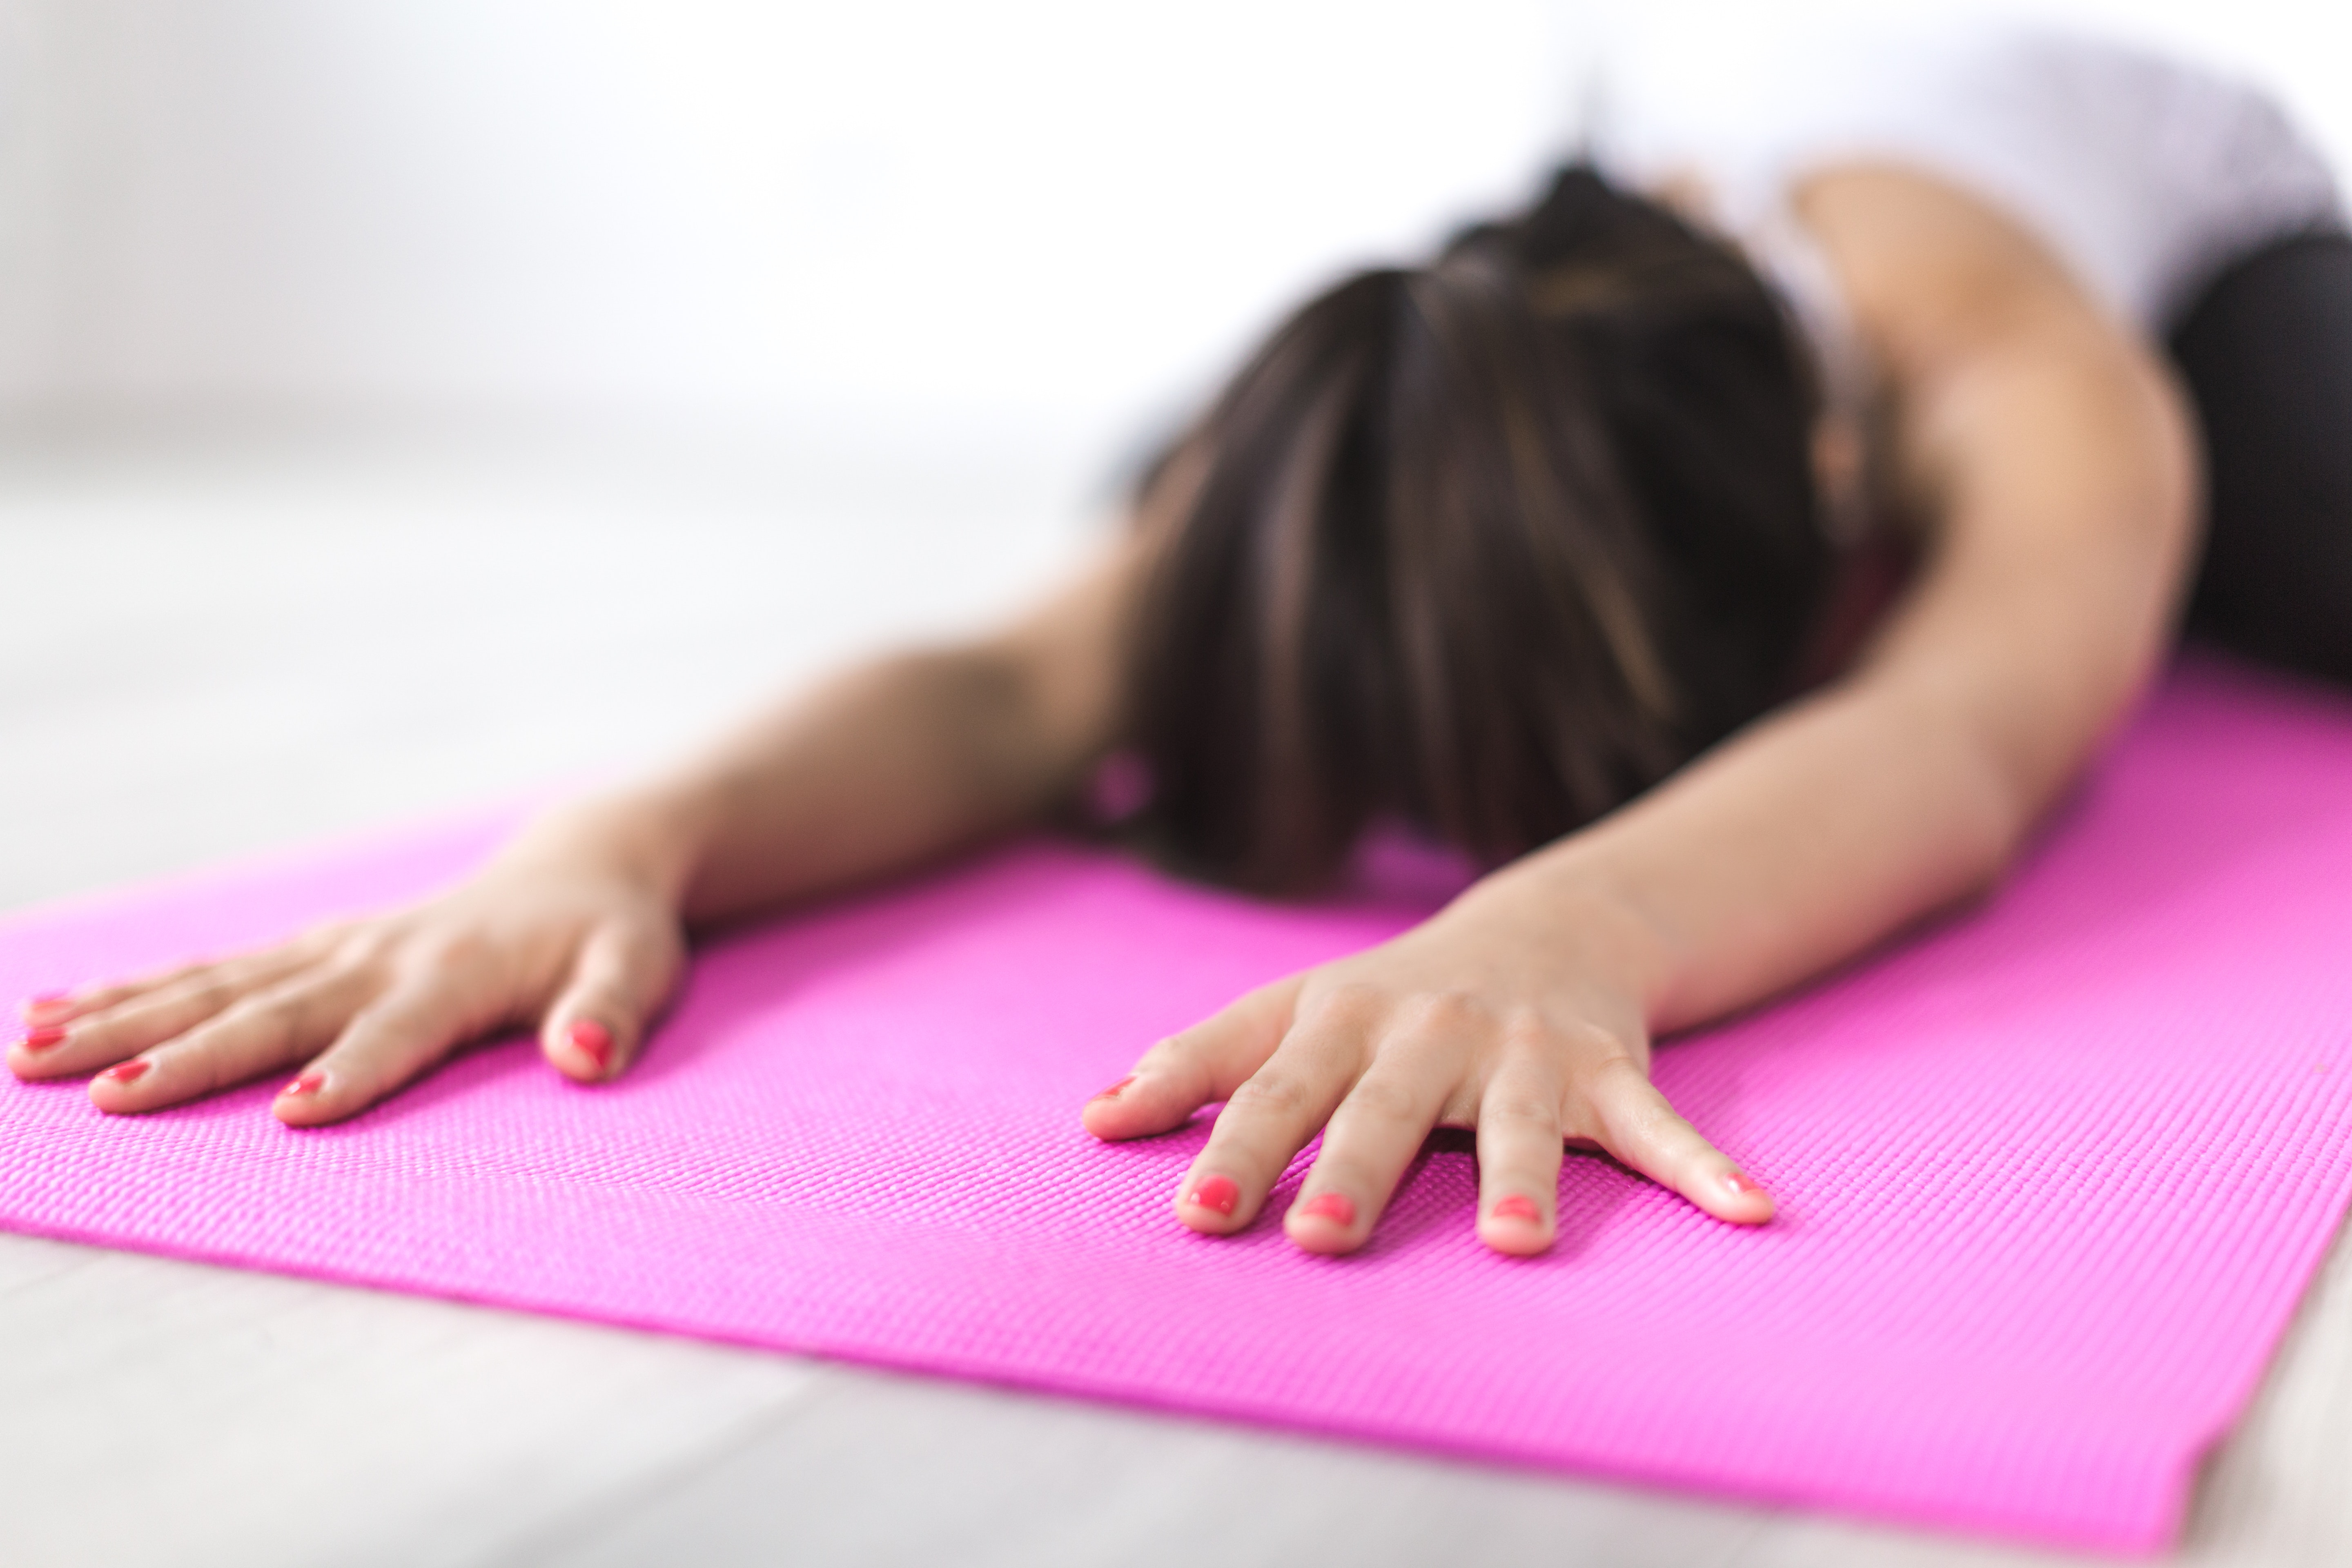 Yoga for Sleep - Poses and Benefits - WellnessWorks YogaForSleep